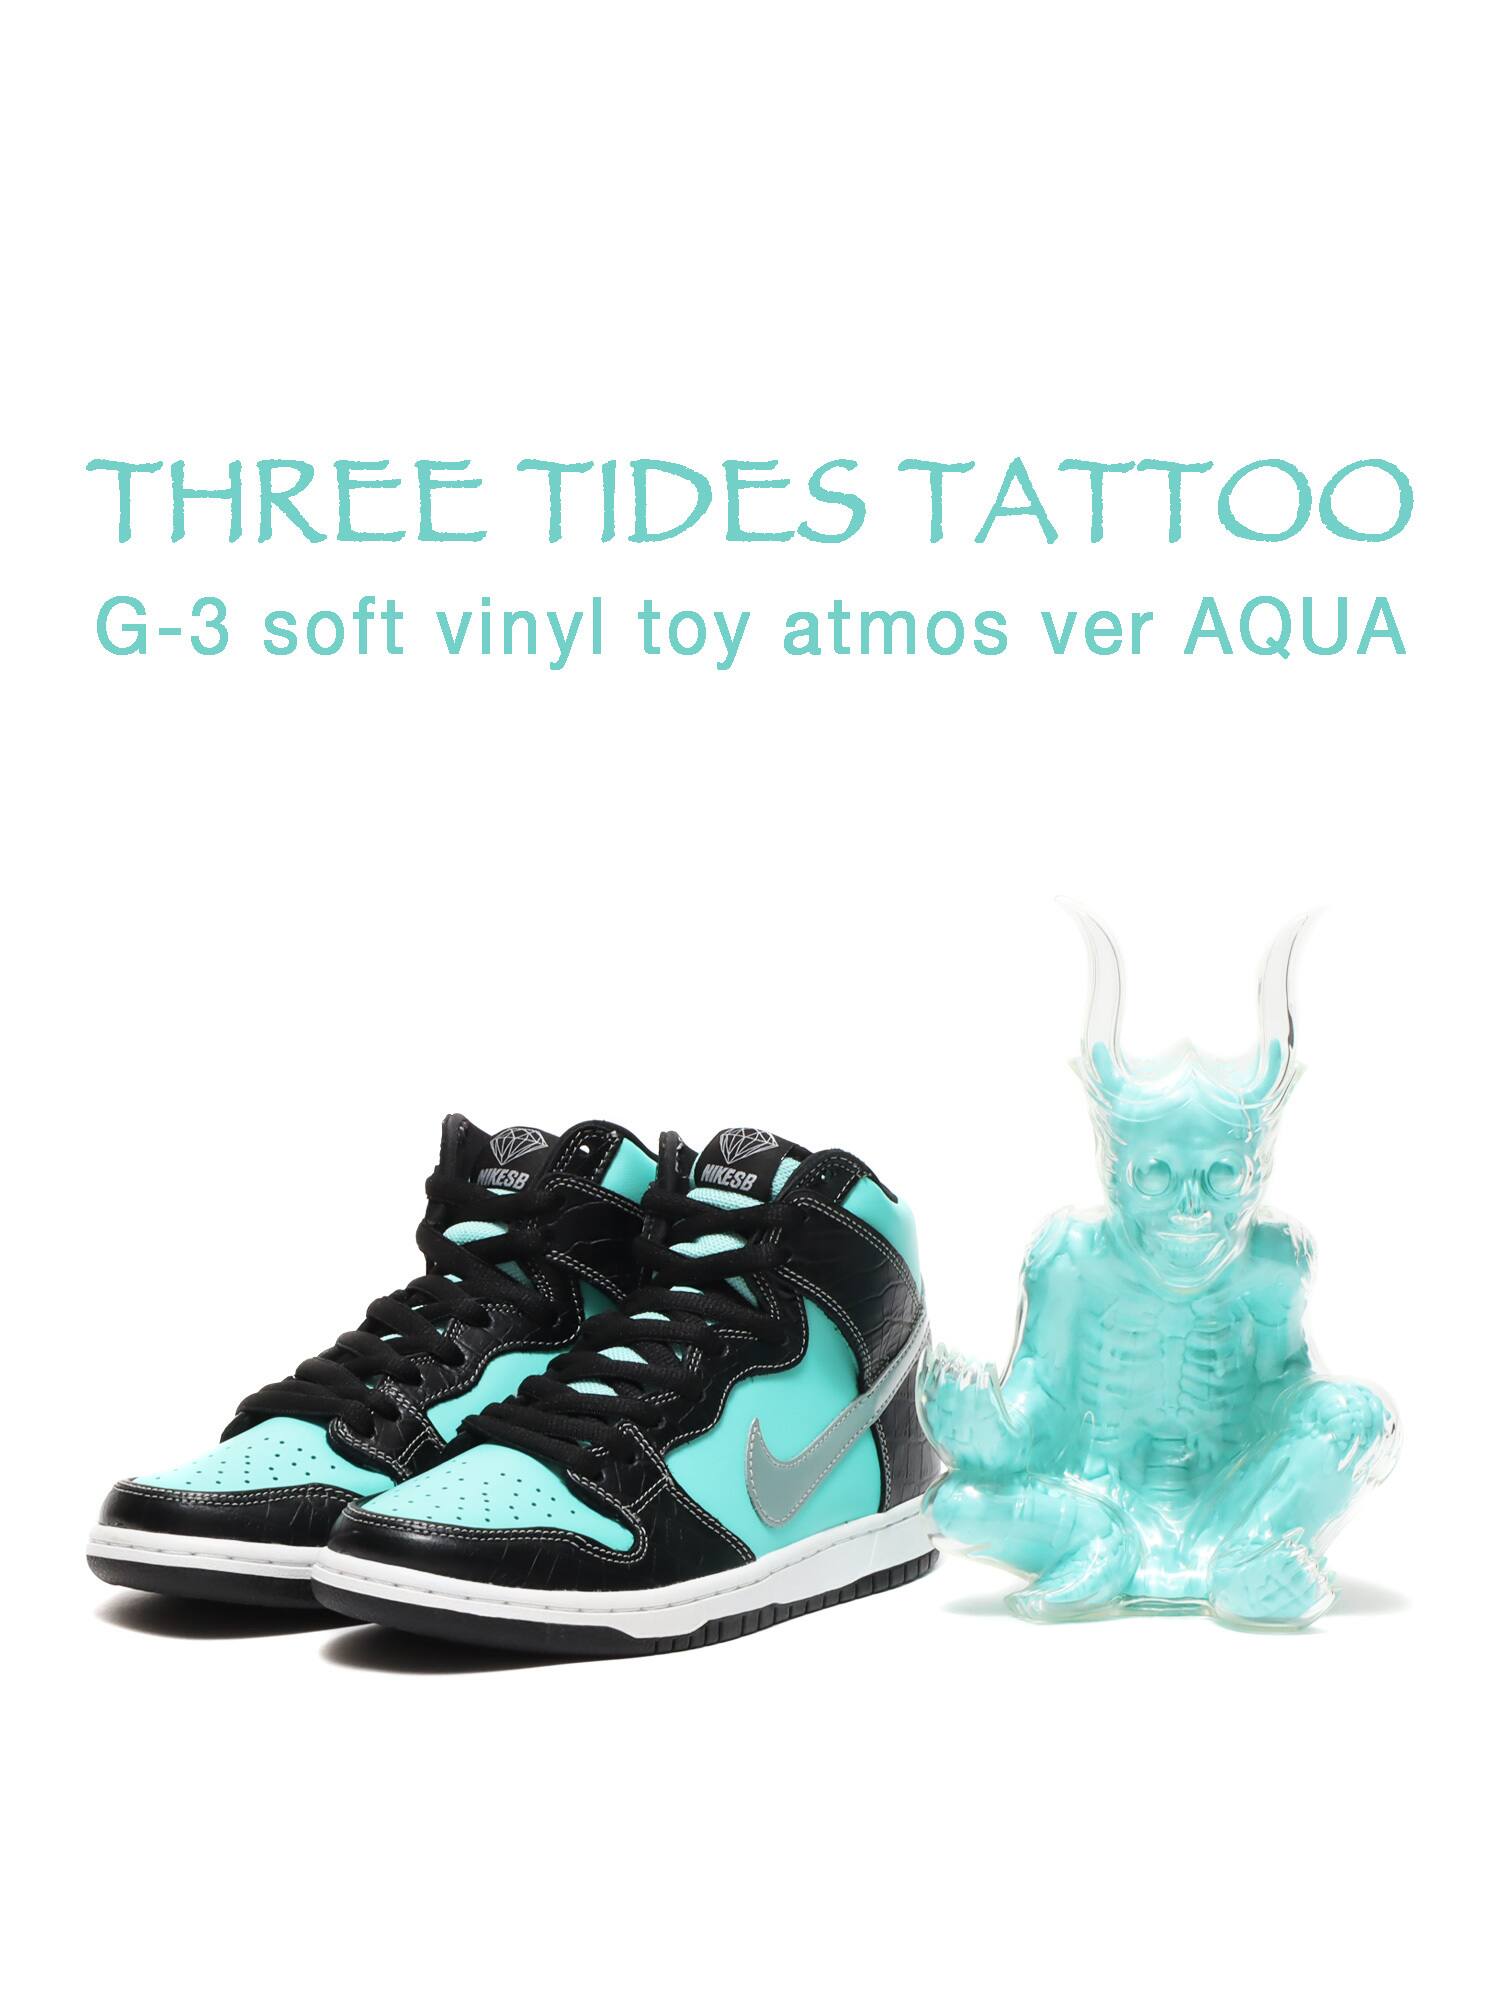 THREE TIDES TATTOO G-3 soft vinyl toy atmos ver AQUA